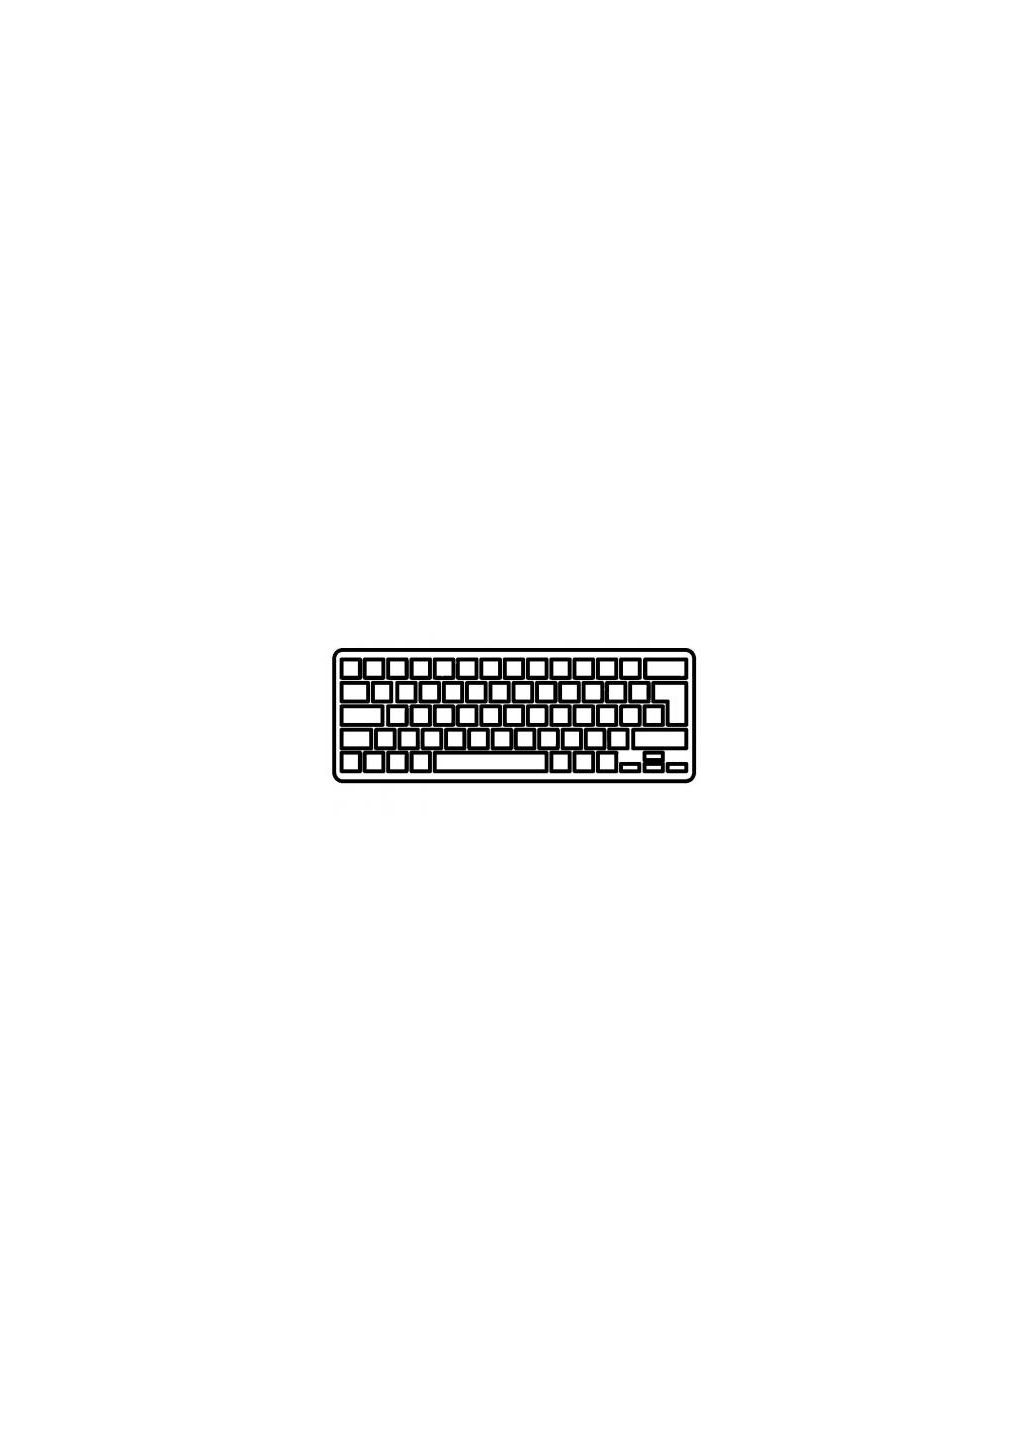 Клавиатура ноутбука Aspire S7391 Series серебро без рамки (с широким шлейфом) R (A43759) Acer aspire s7-391 series серебро без рамки (с широким (276706588)